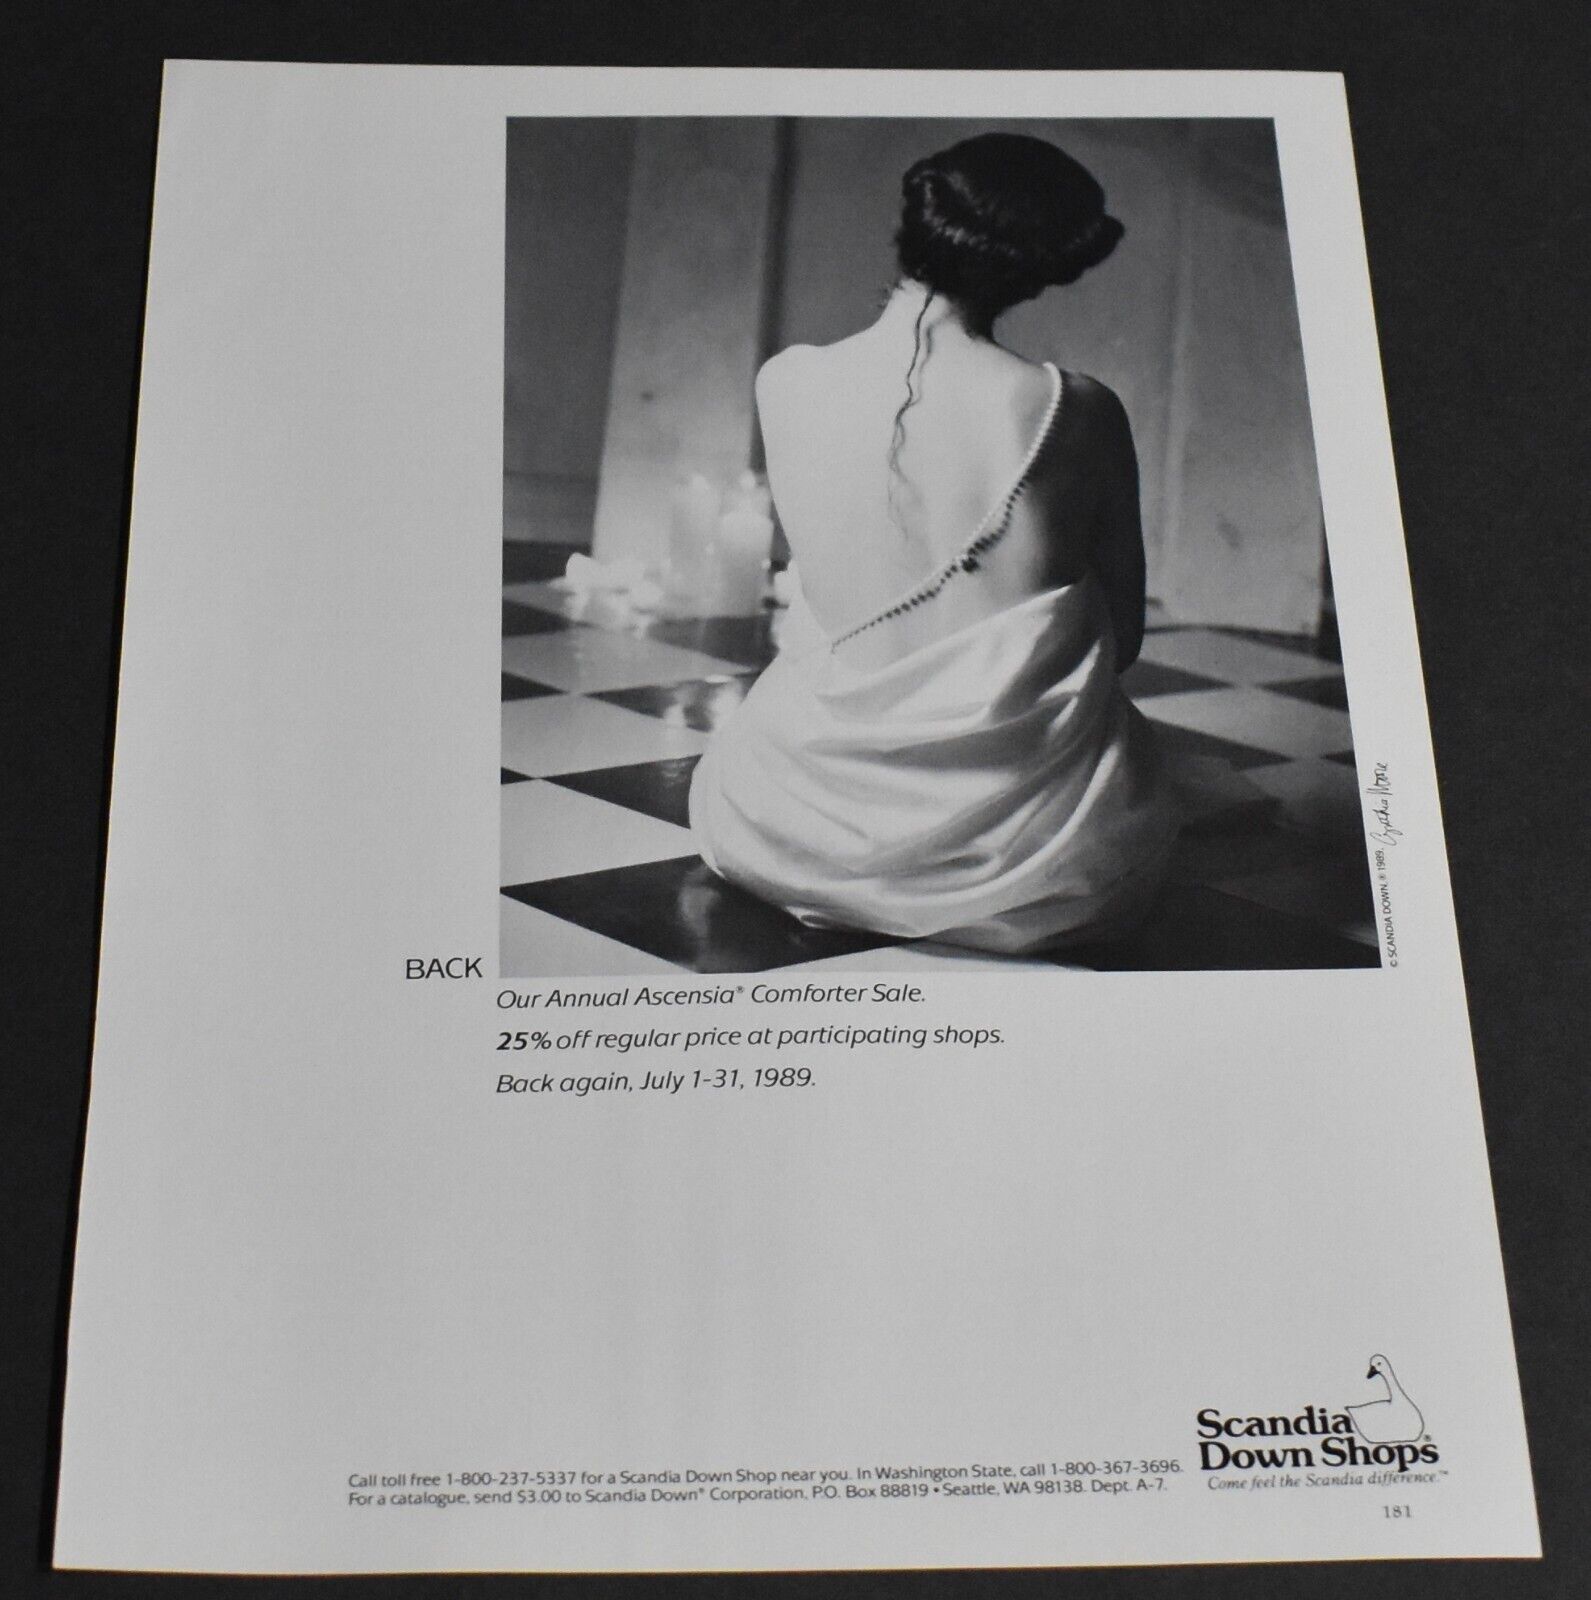 1989 Print Ad Scandia Down Shops Ascensia Comforter Lady Bare Back Beauty art